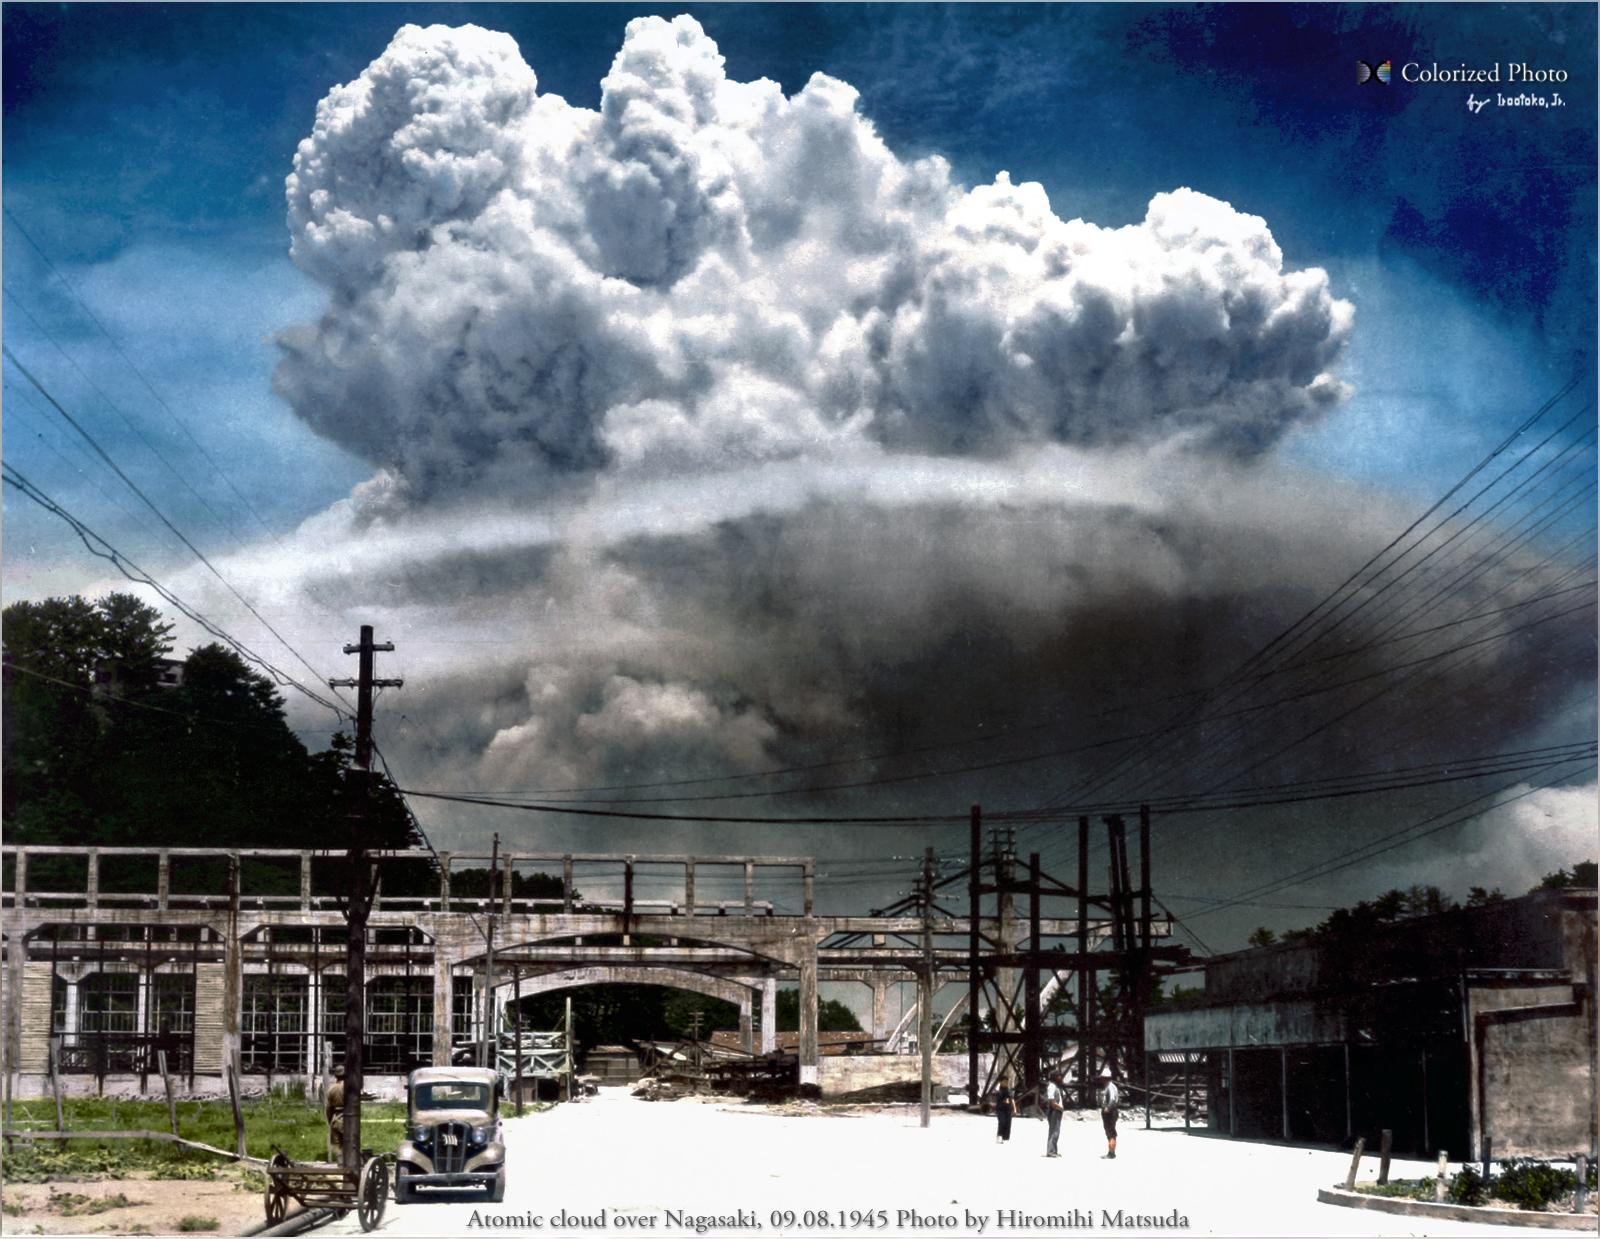 nagasaki explosion - Colorized Photo by Lootoko, J. Atomic cloud over Nagasaki, 09.08.1945 Photo by Hiromihi Matsuda